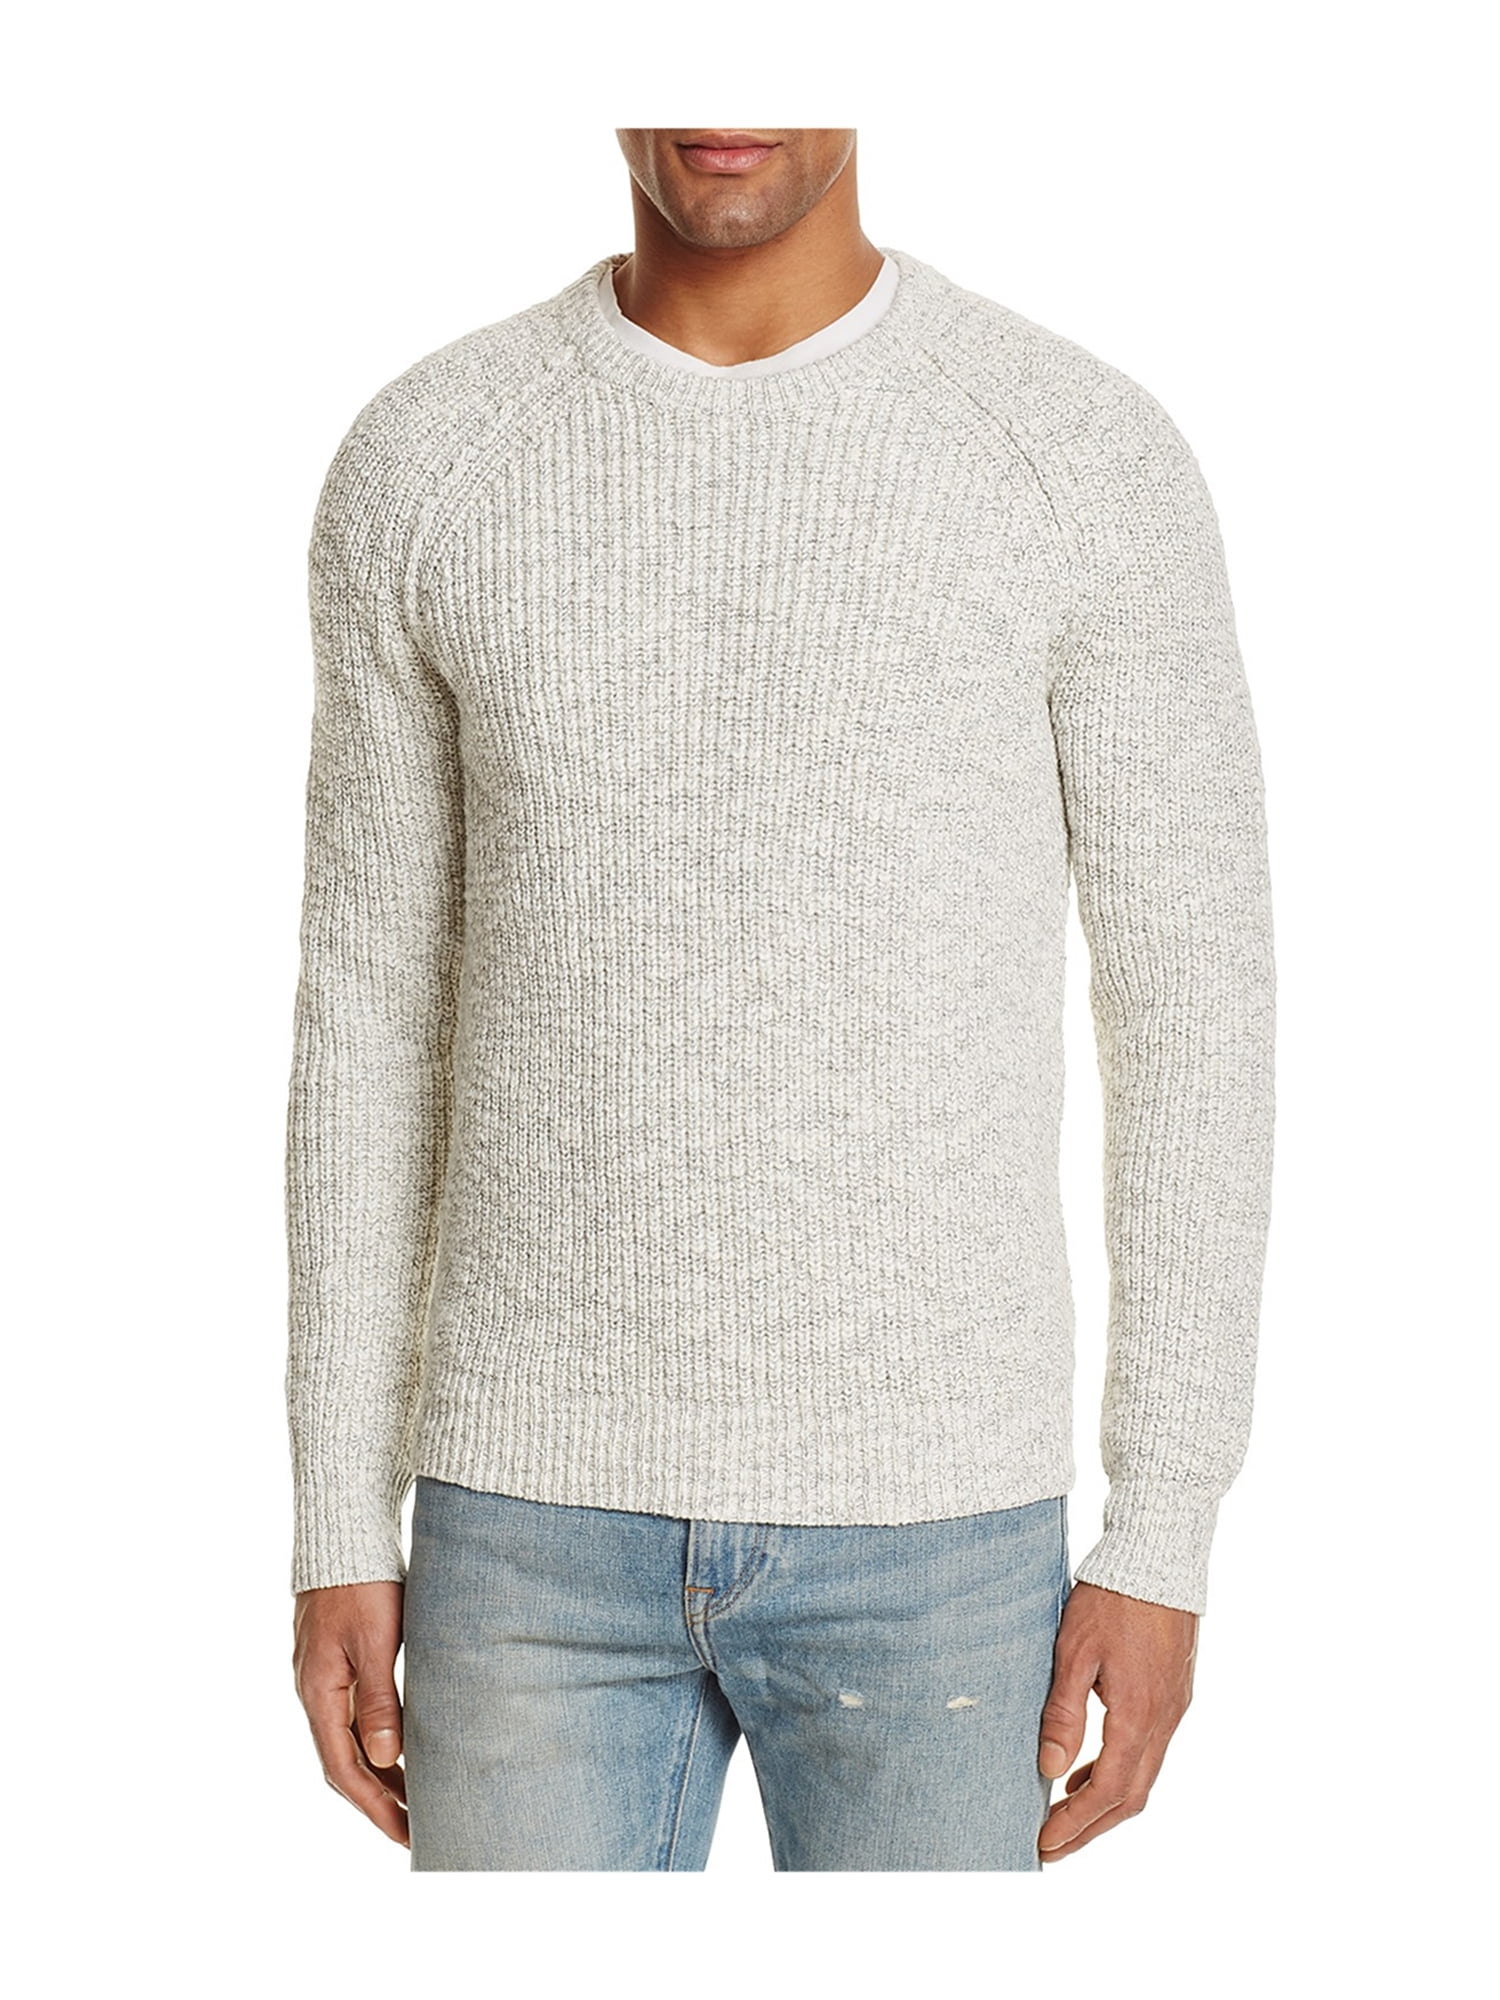 Bloomingdale's Mens Shaker Stitch Pullover Sweater - Walmart.com